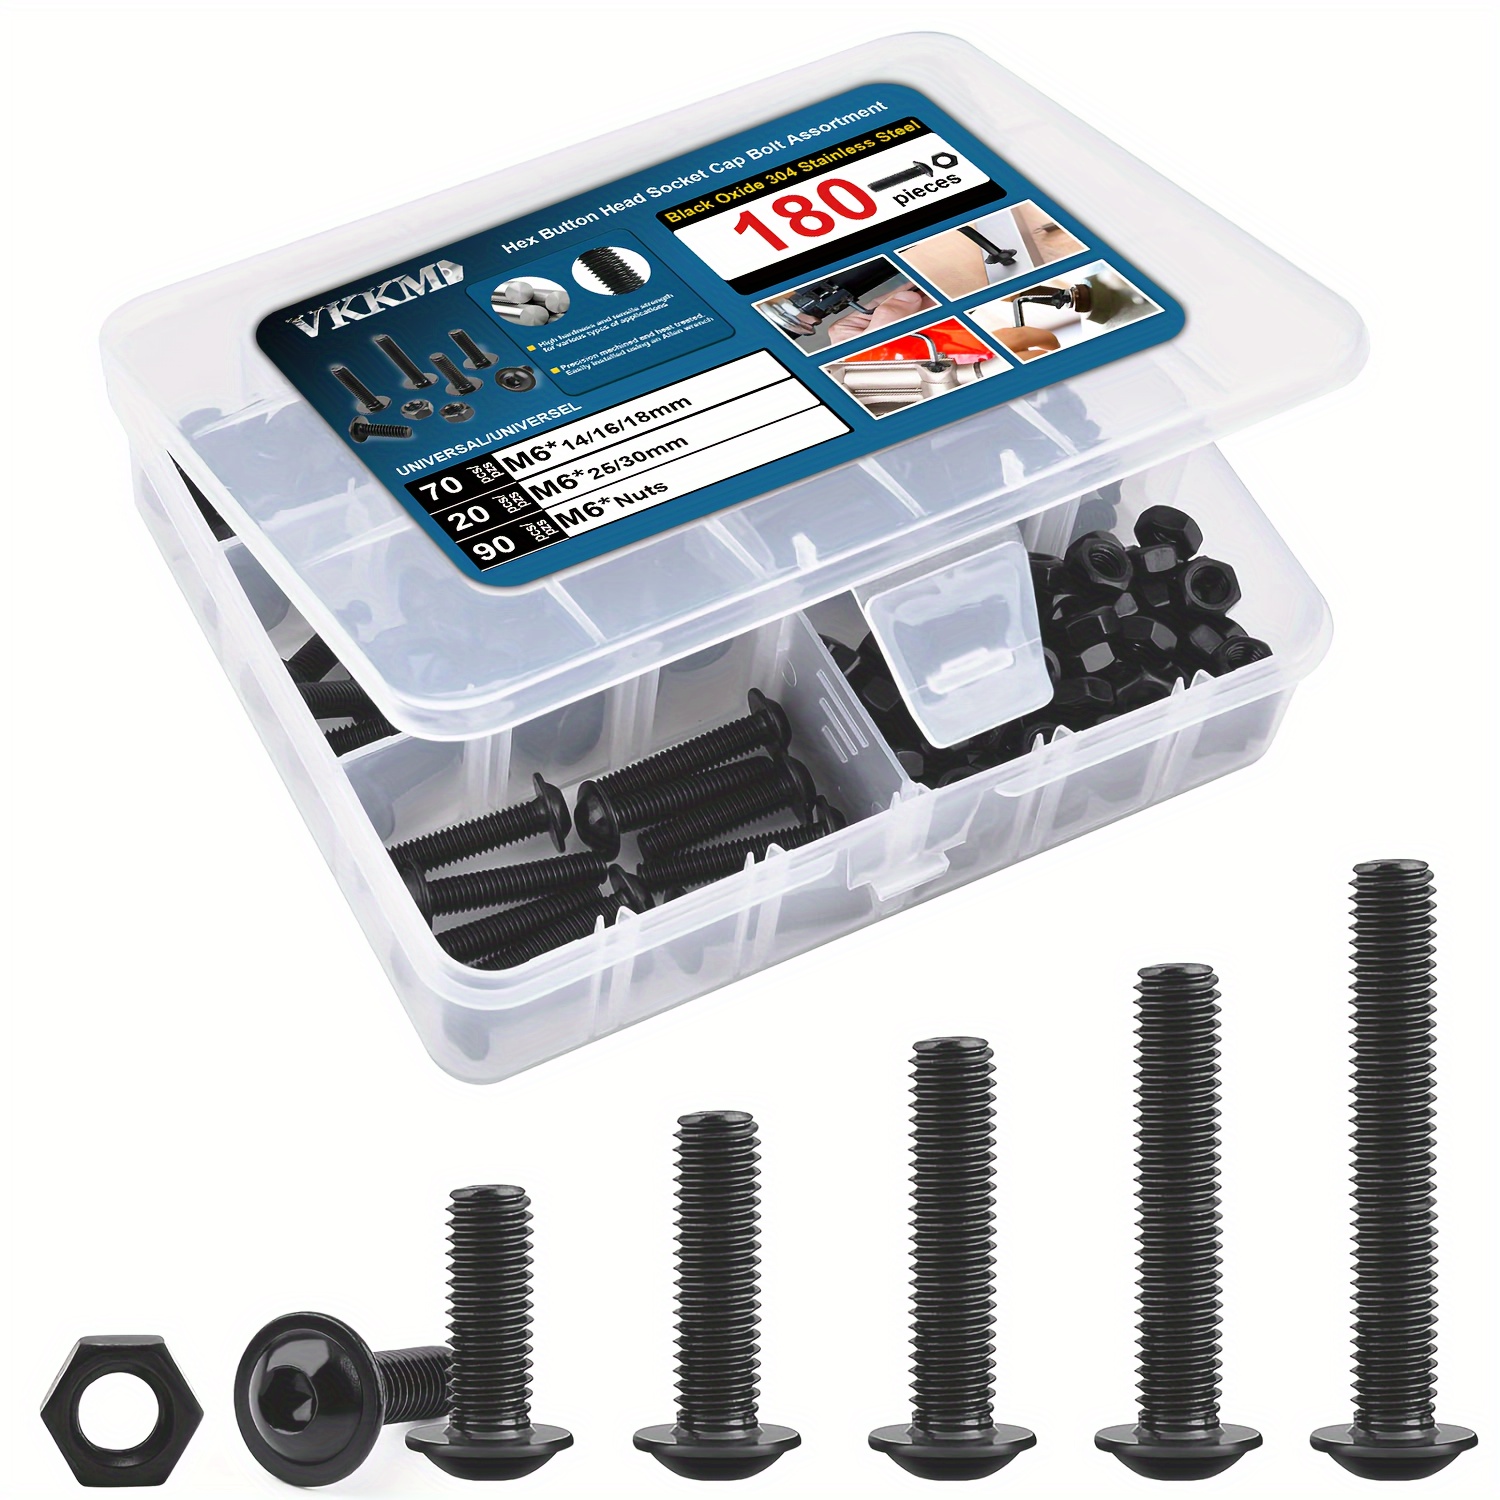 

Vkkm 180 Pcs M6 Hex Button Head Socket Cap Flange Bolt Assortment Kit/screws & Nuts Set/black Oxide, M6 X 14/16/18/25/30mm, Reusable Storage Case With Adjustable Dividers